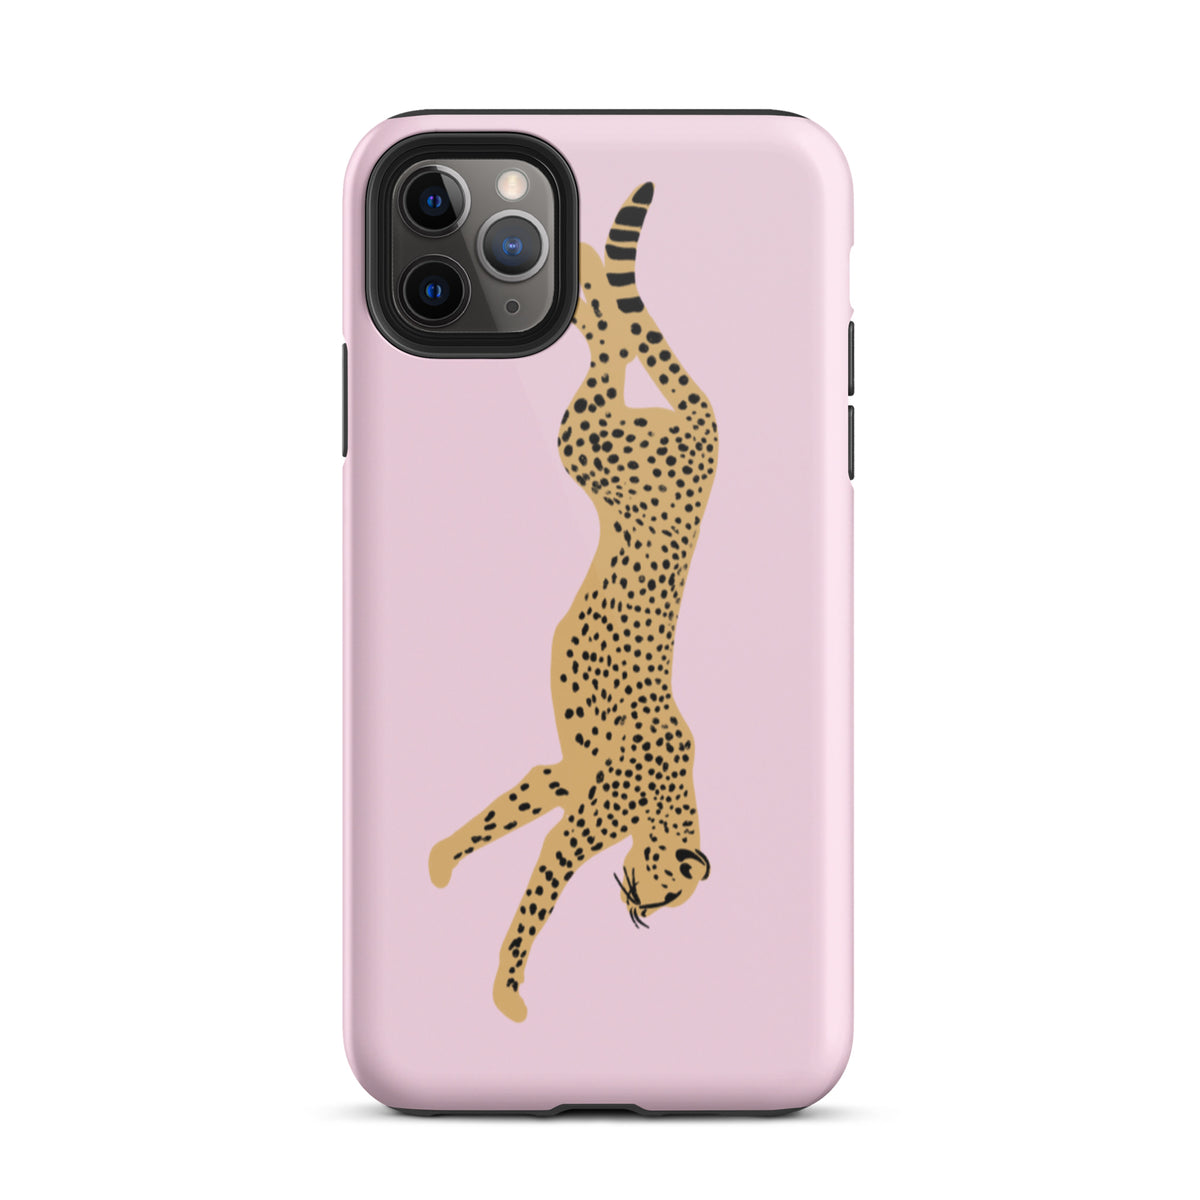 Iphone 11 pro cheetah pink phone case glossy